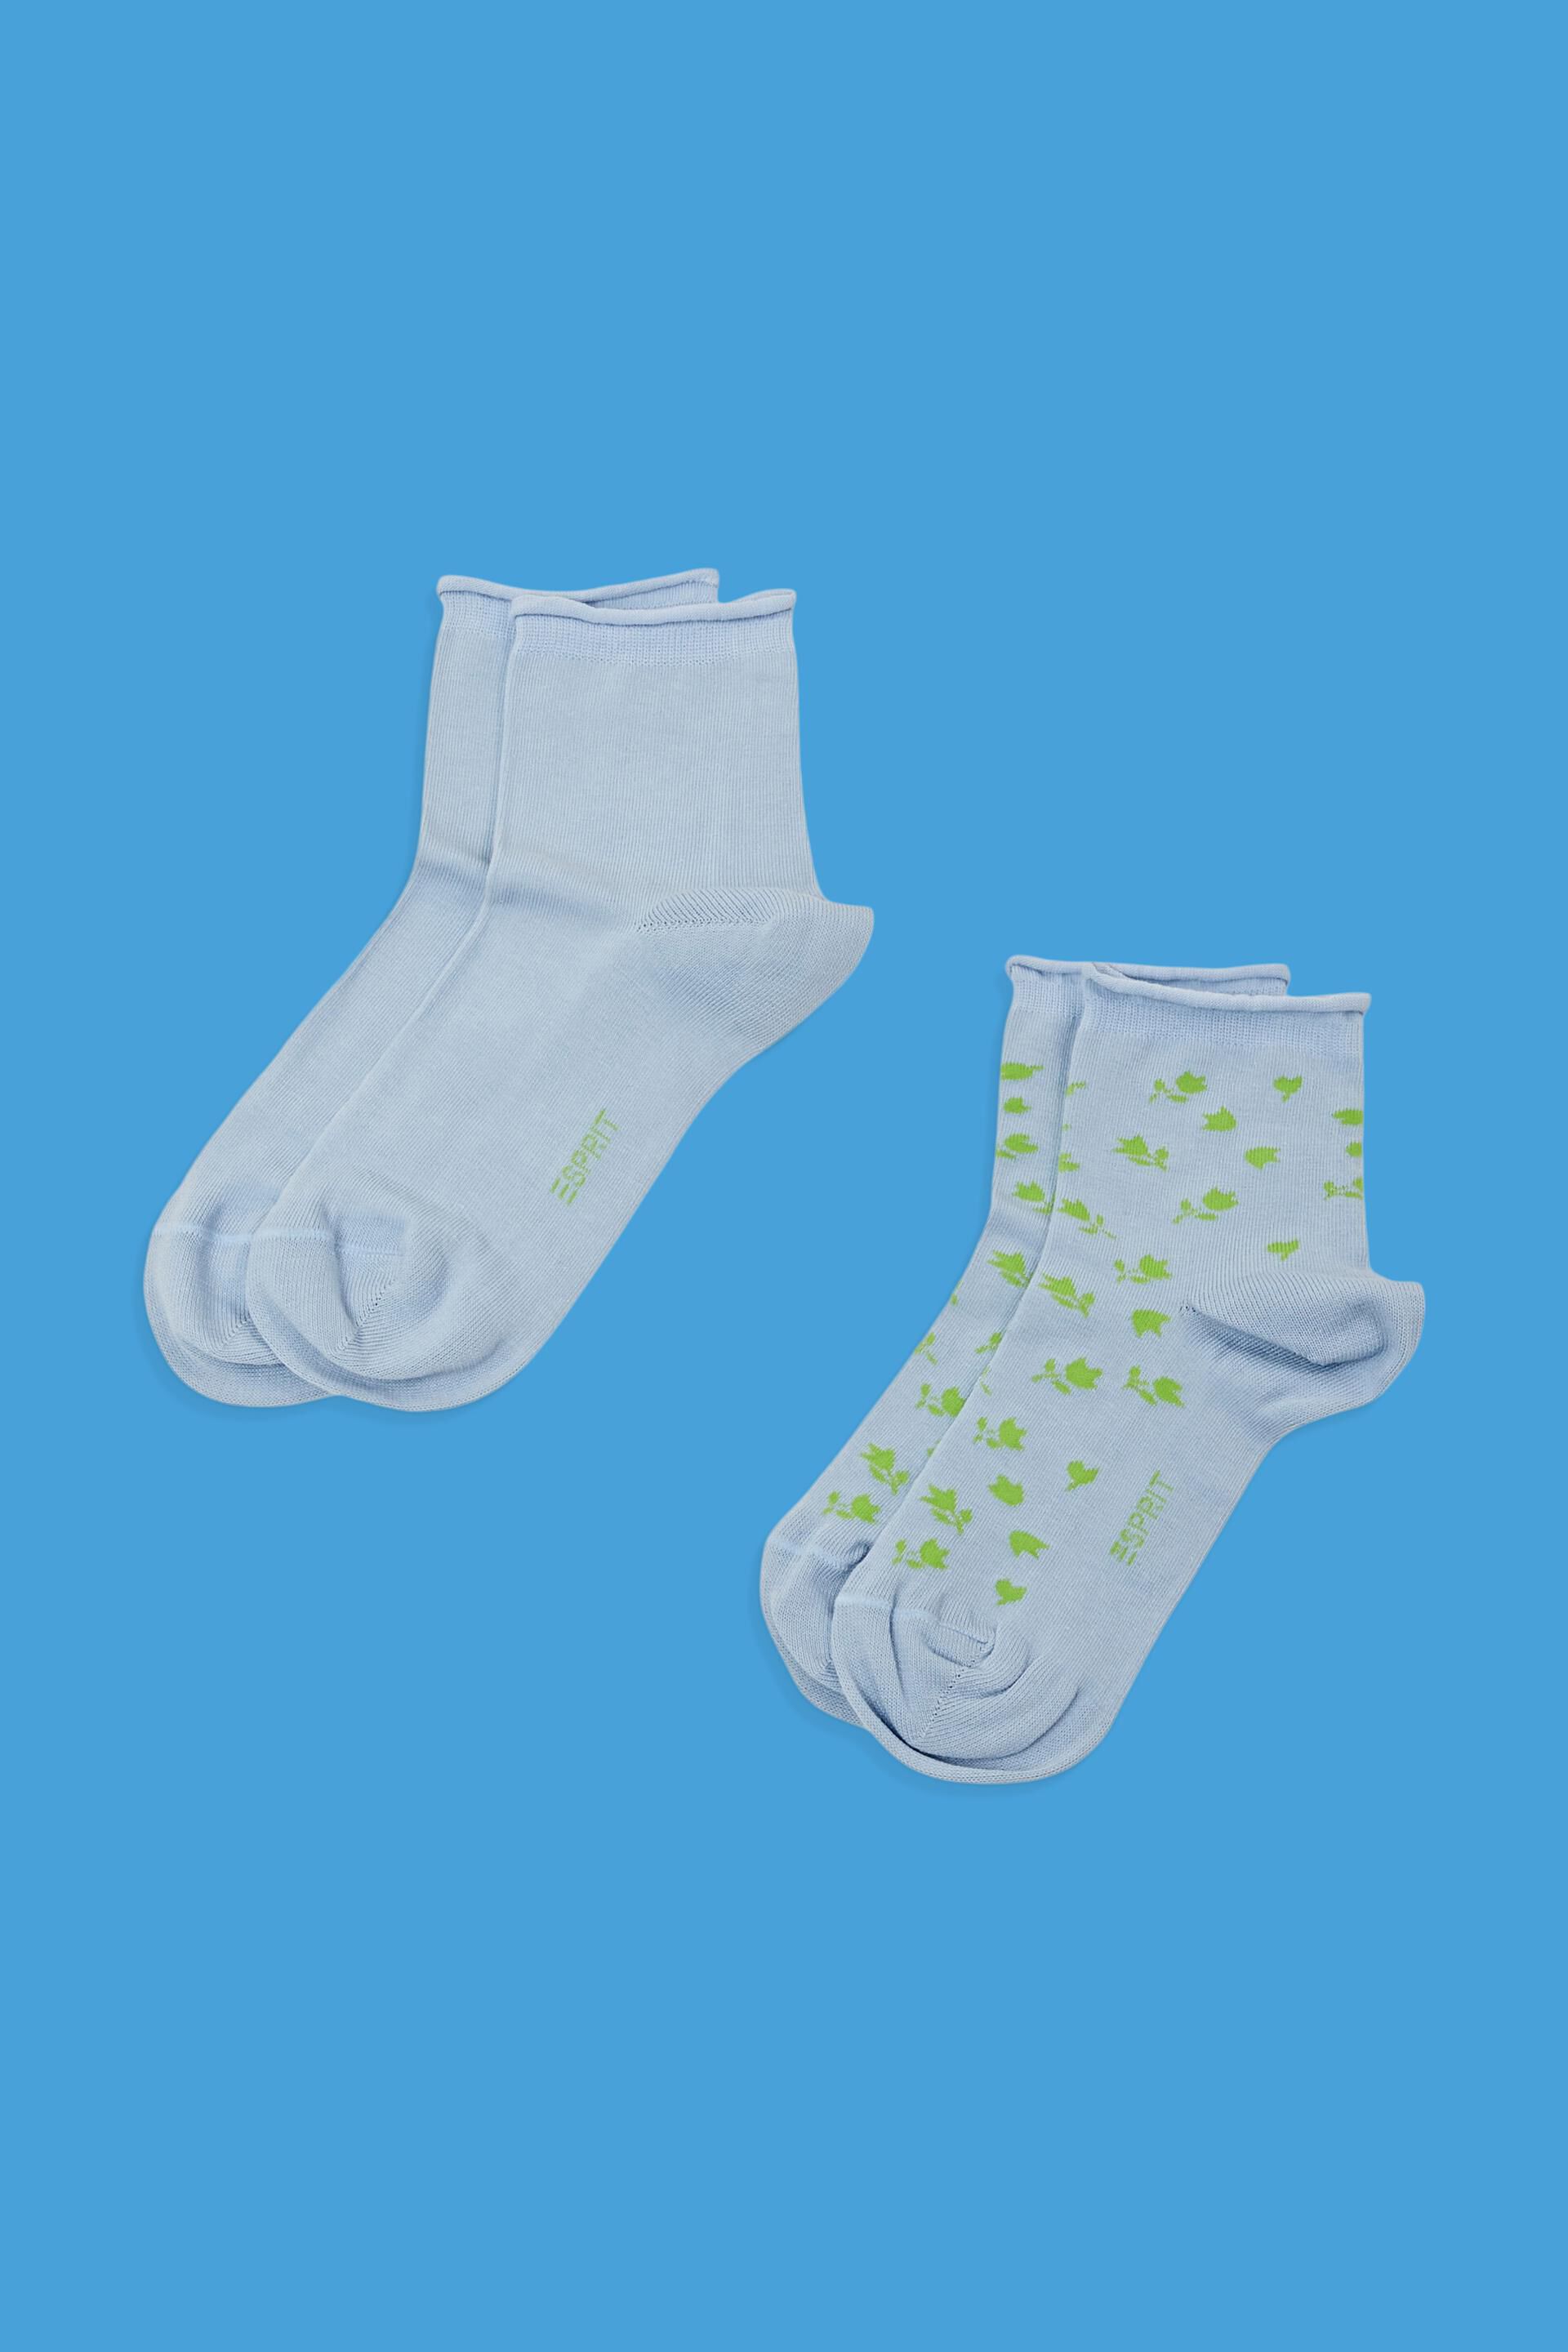 Esprit pattern floral with 2-pack short of socks